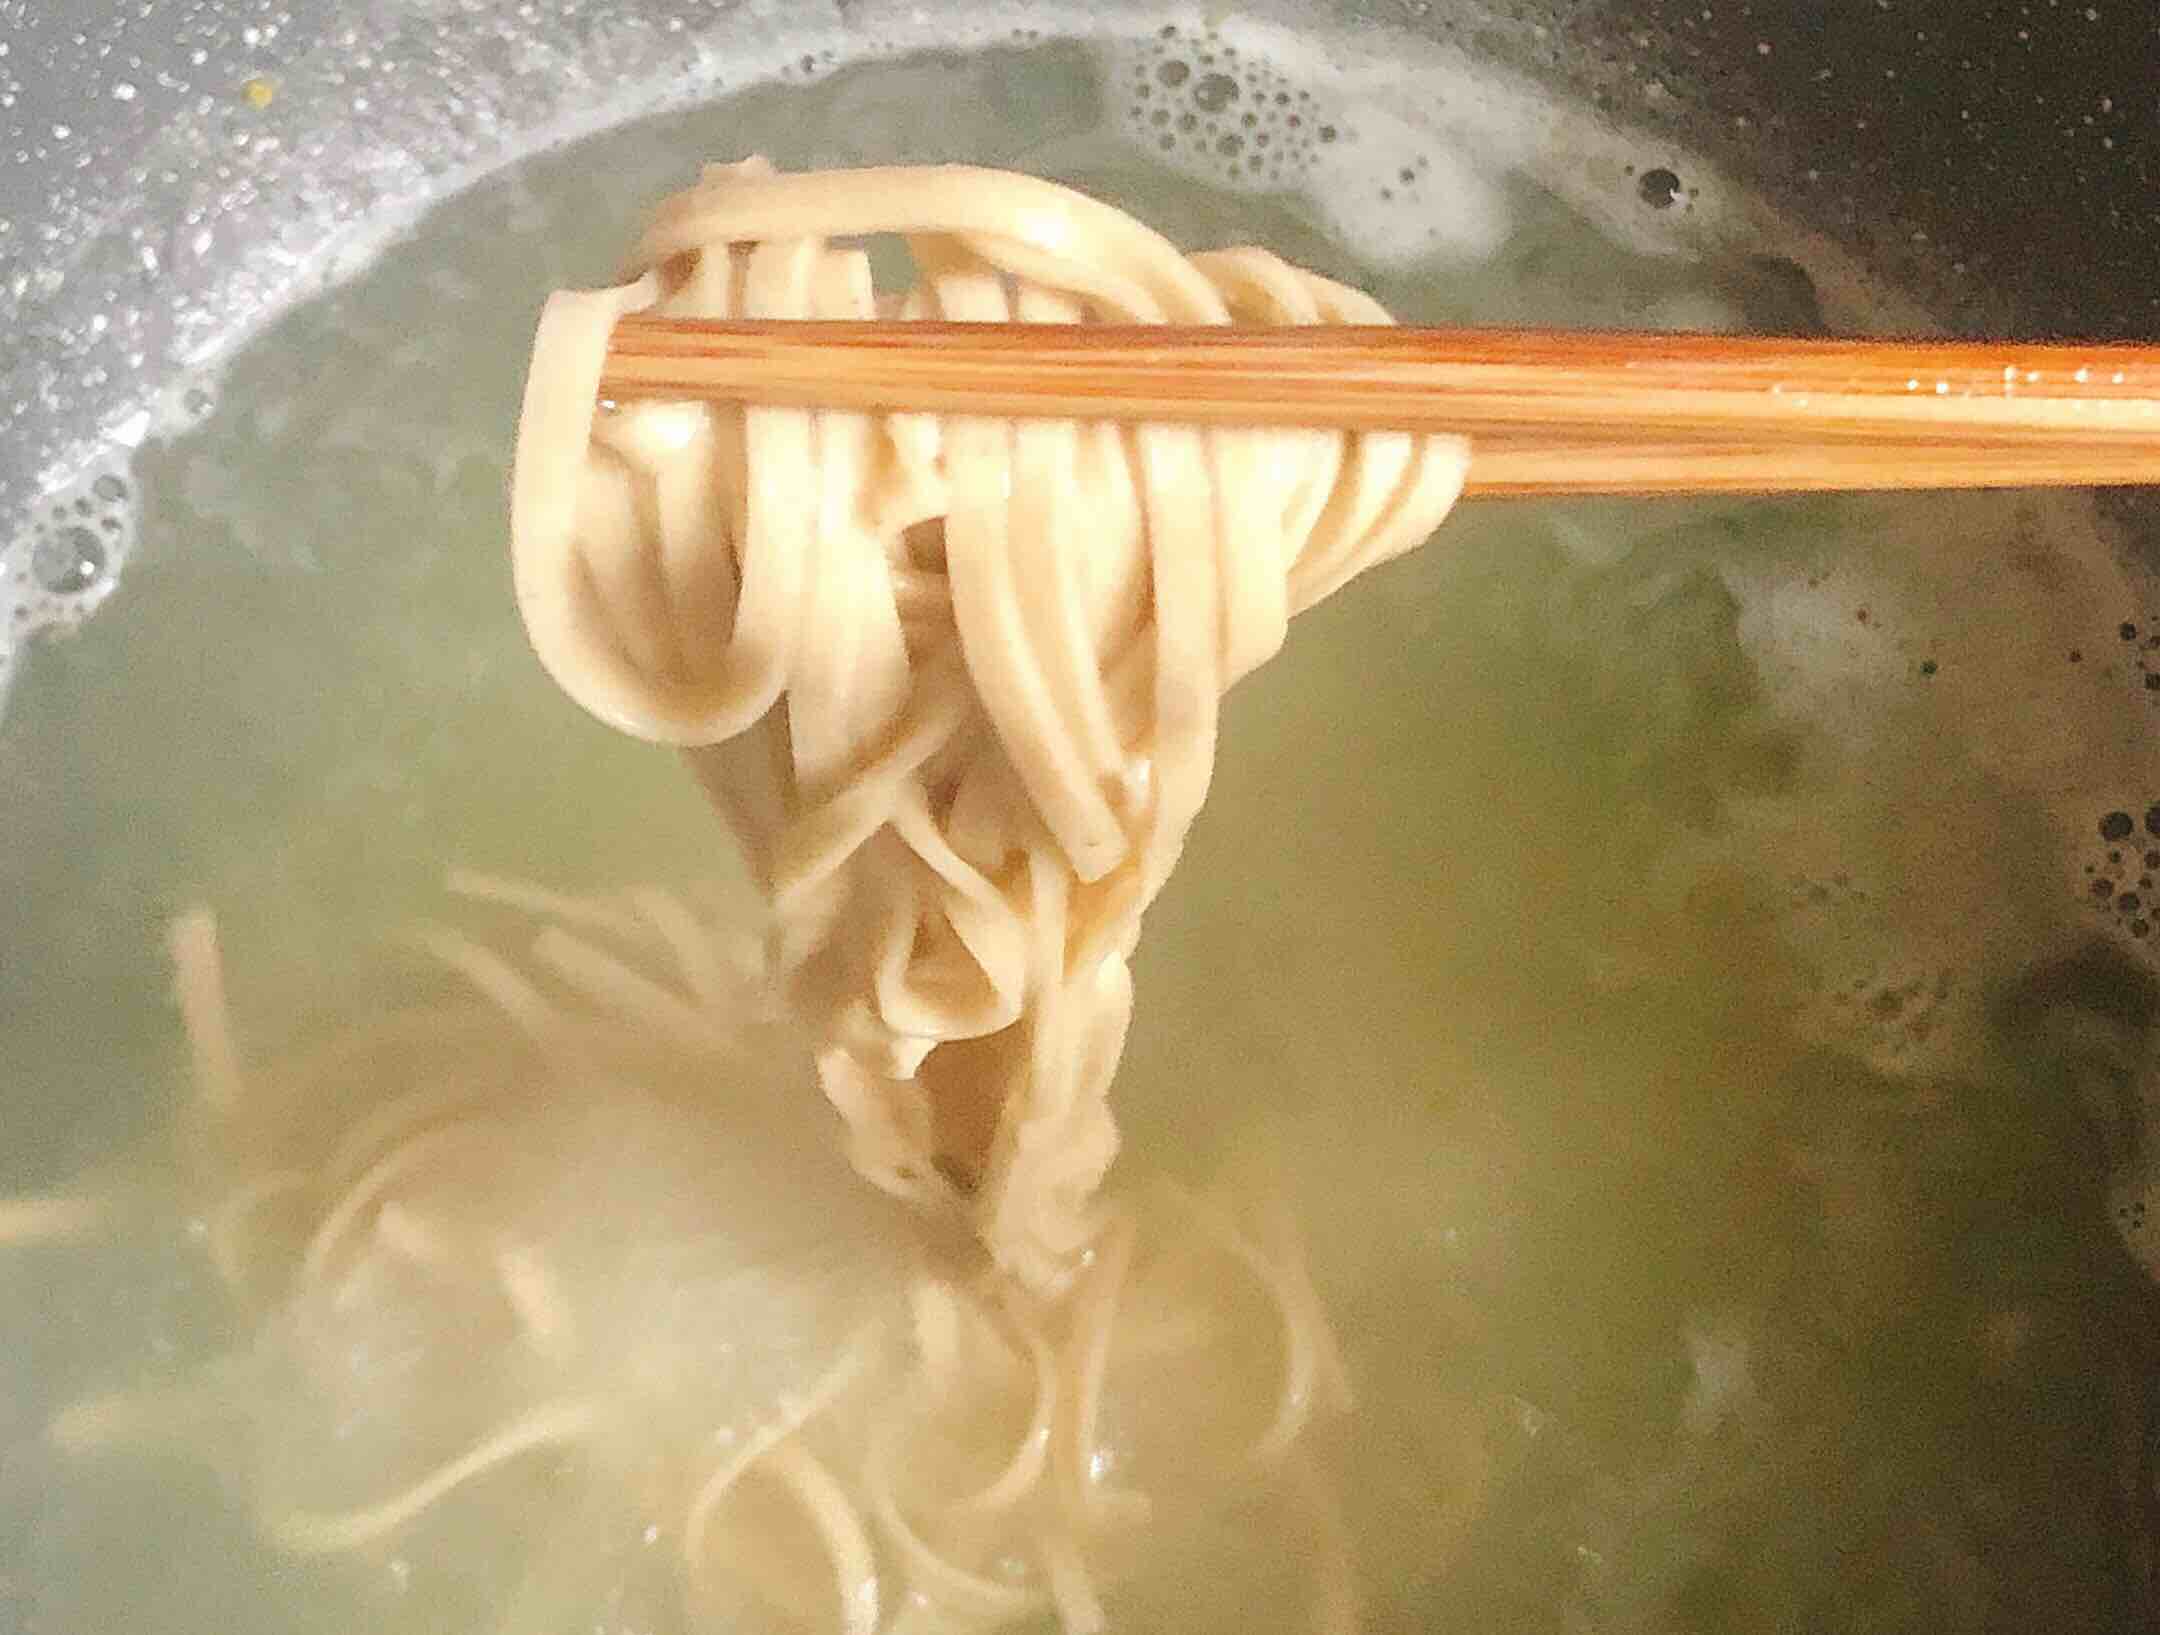 Rye Tartary Buckwheat Noodles recipe